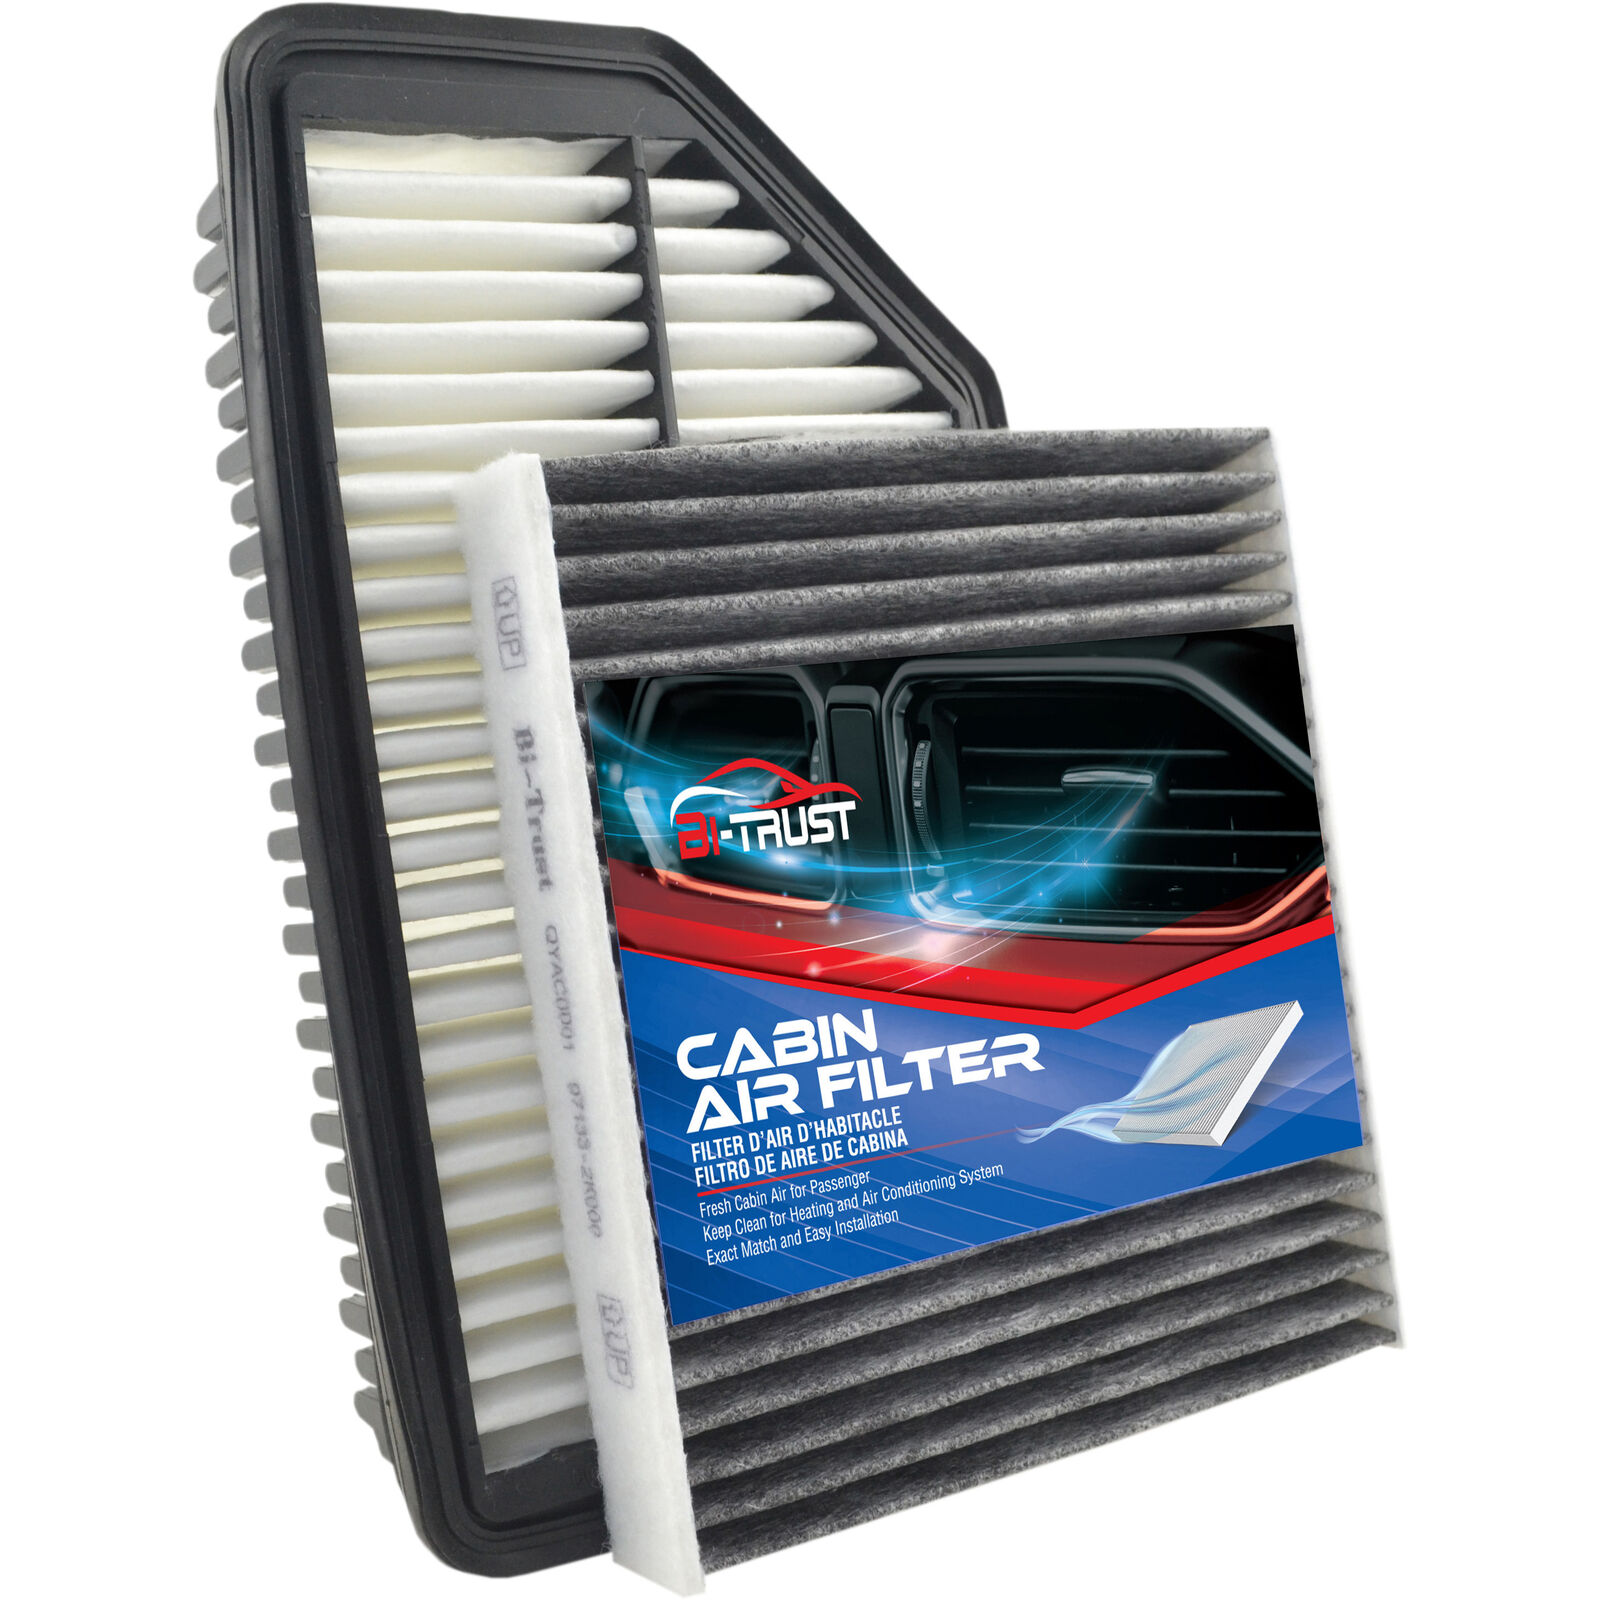 Engine & Cabin Air Filter Combo Set for Kia Soul 2012-2013 L4 1.6L 2.0L